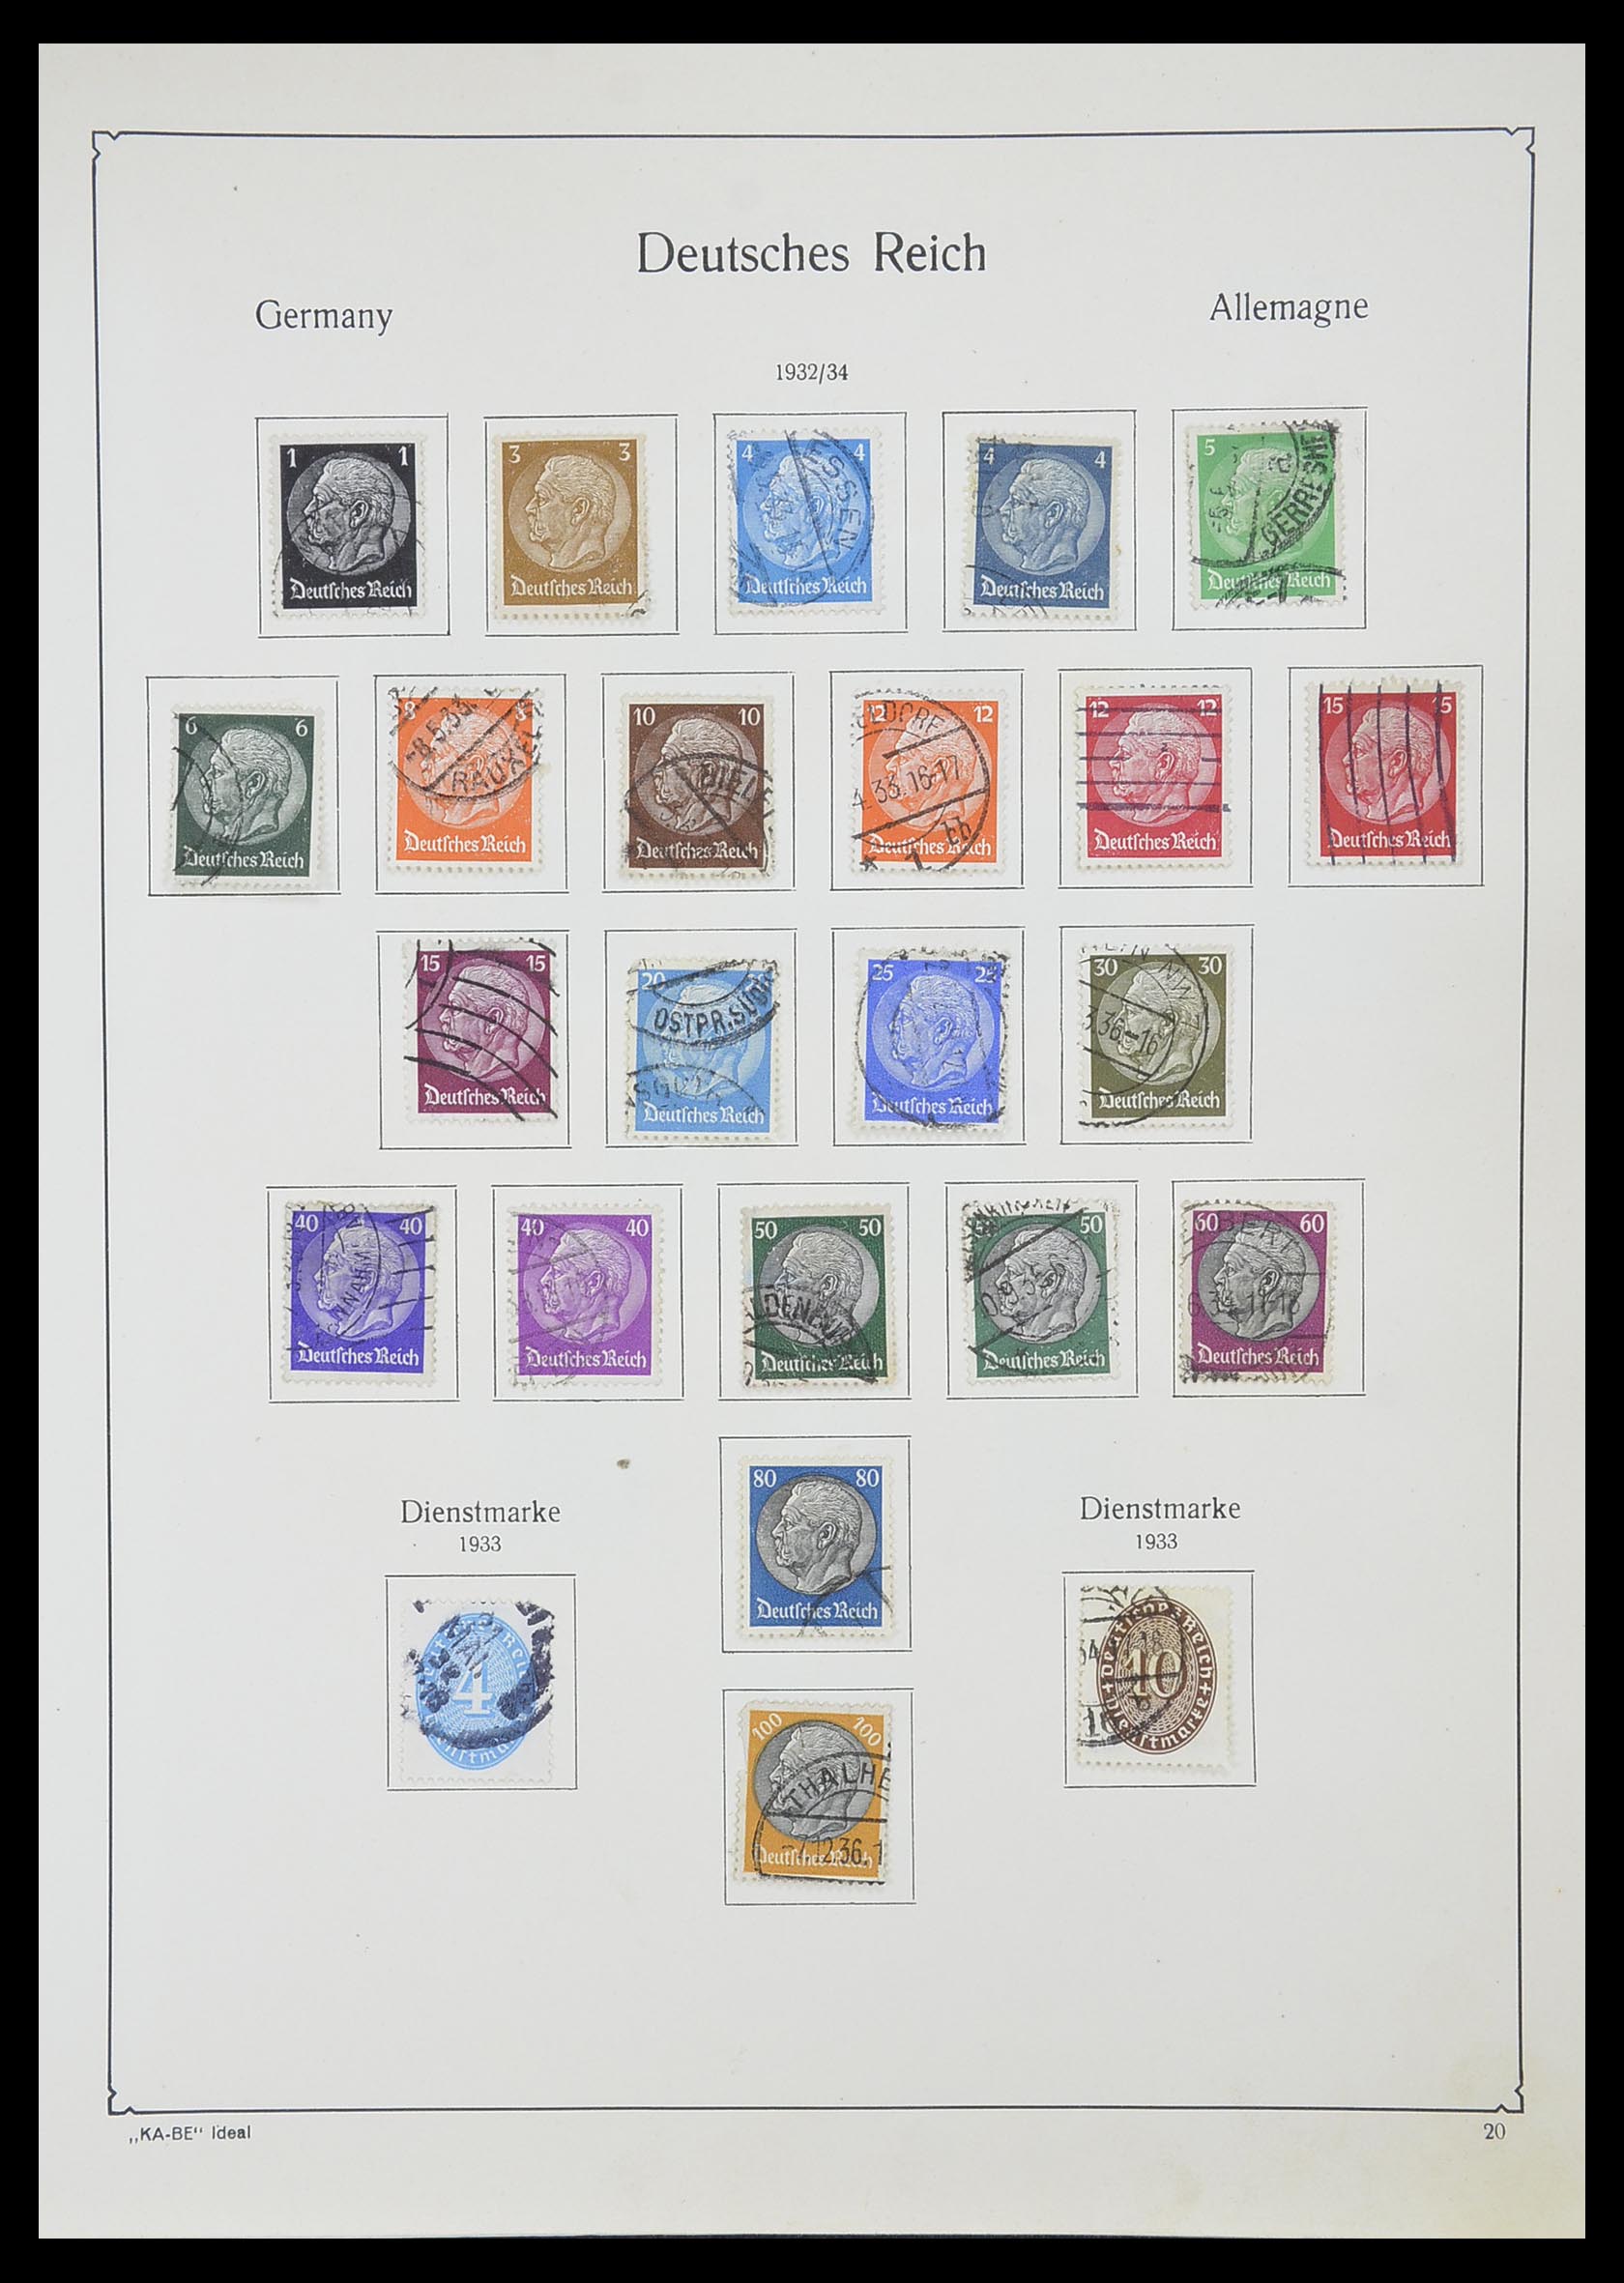 33359 026 - Stamp collection 33359 German Reich 1872-1945.